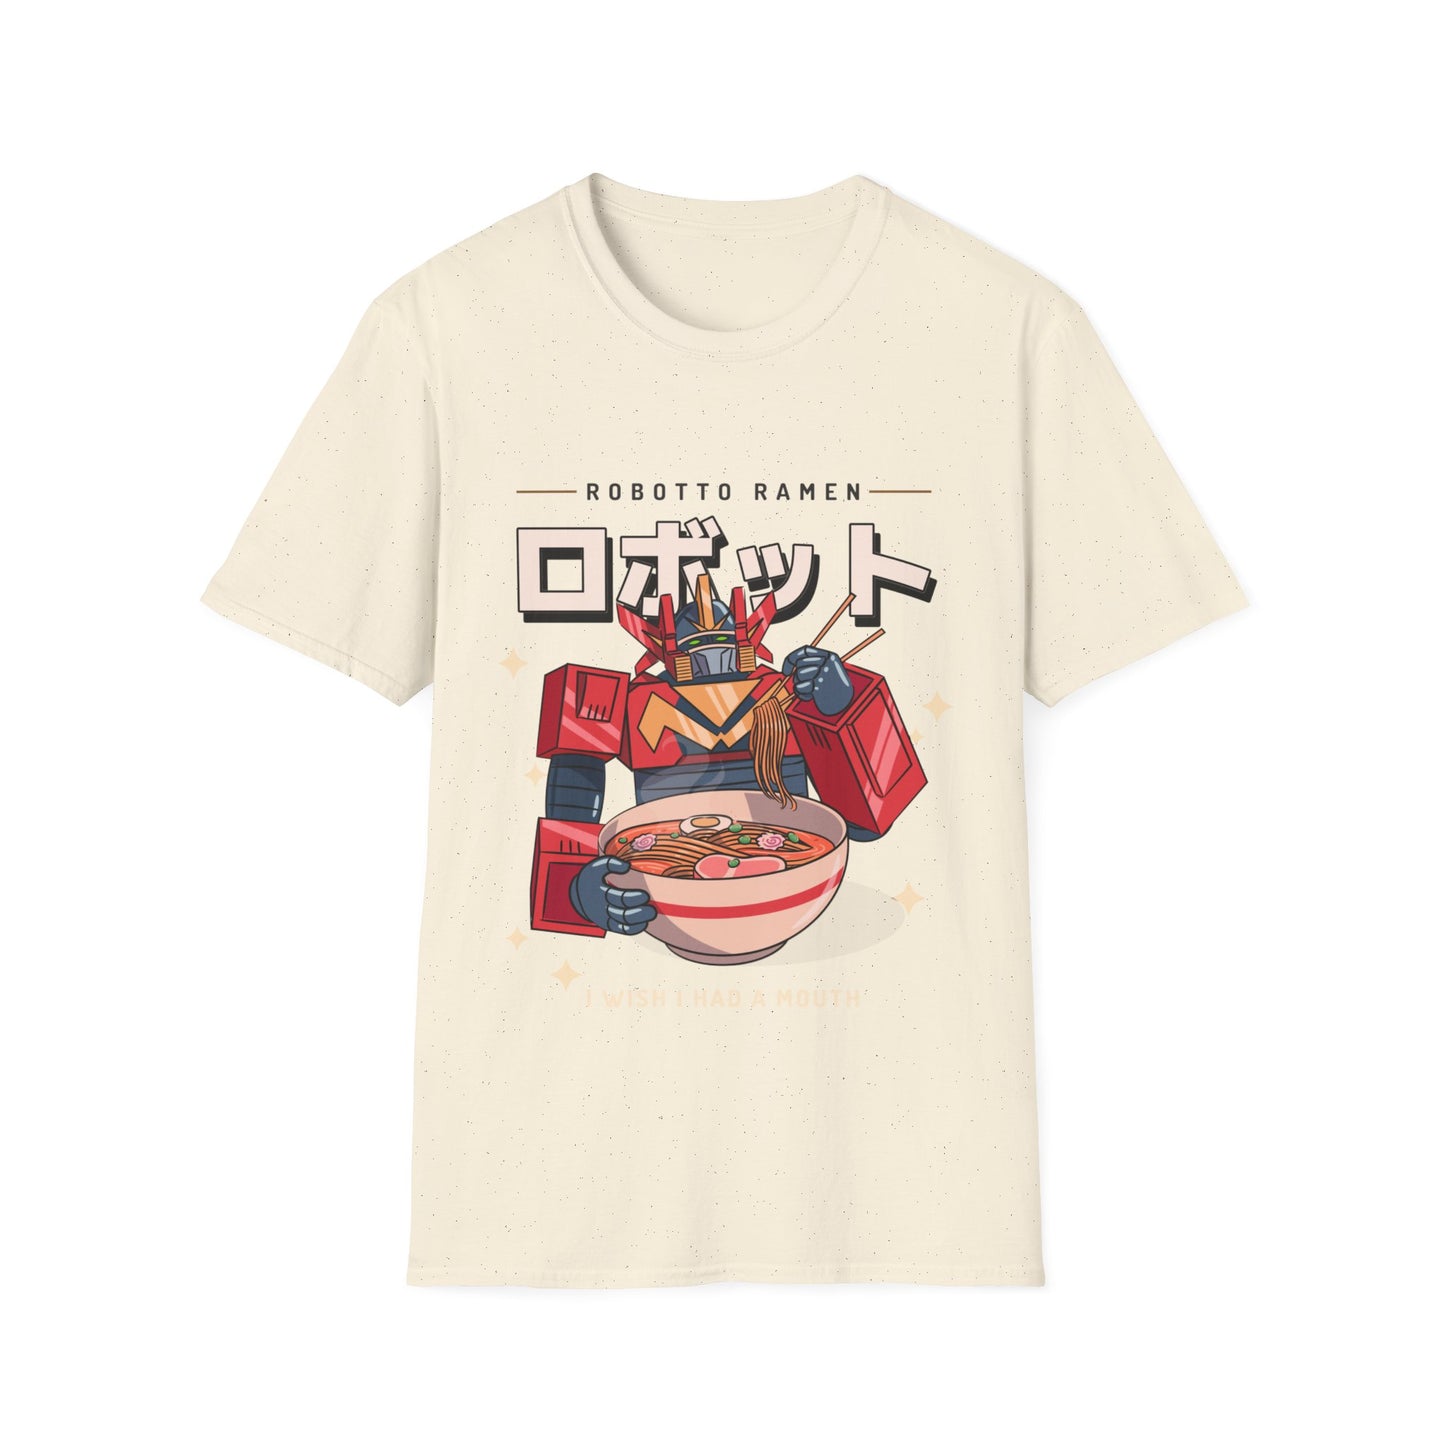 The Roboto Ramen T-Shirt